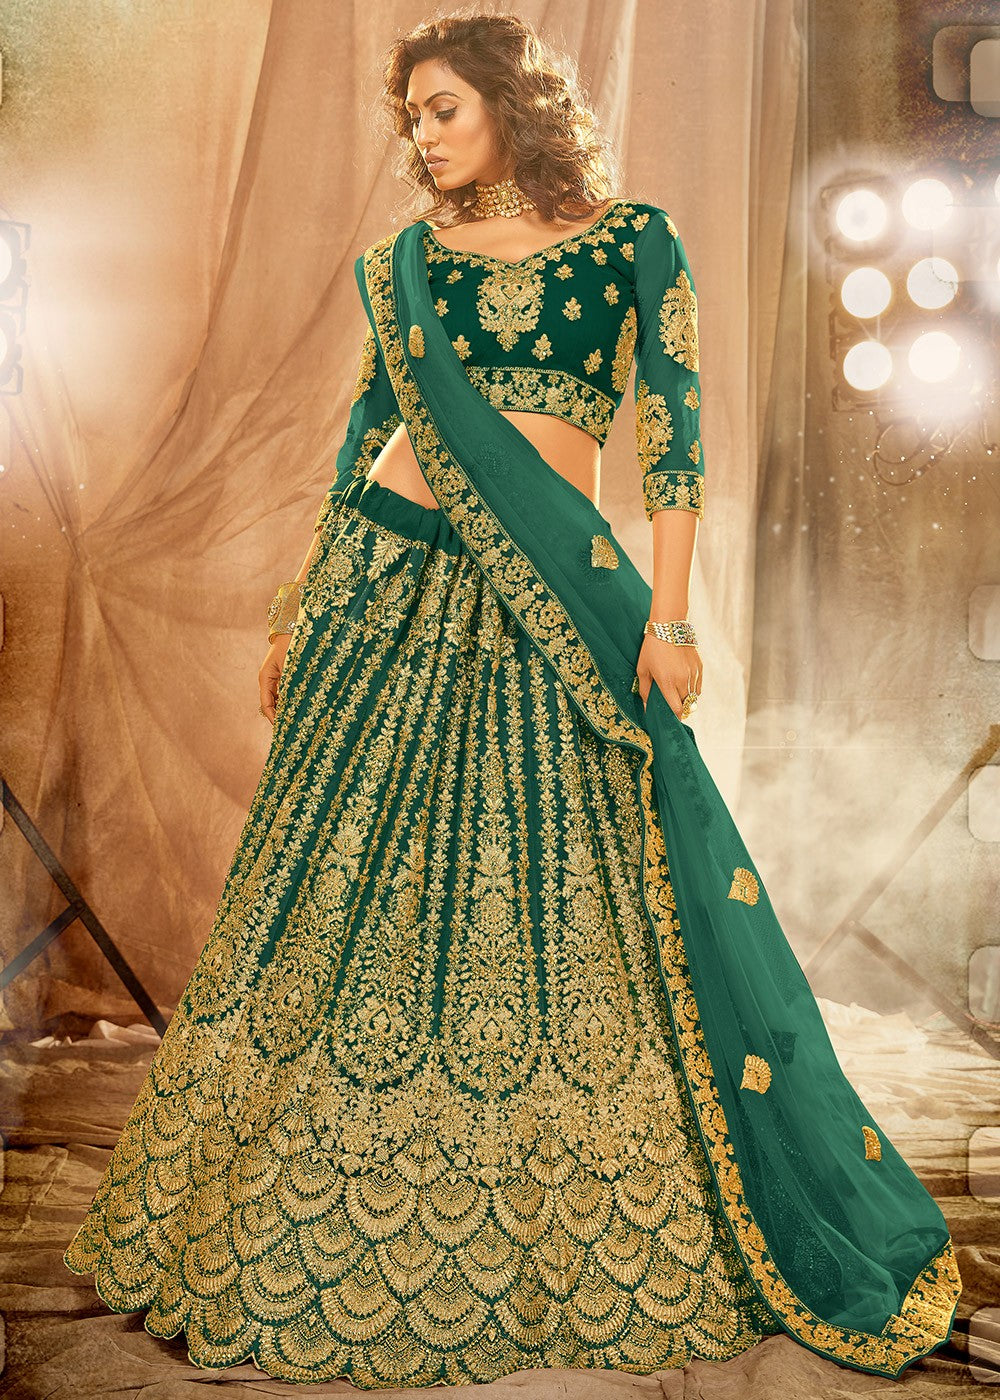 Green Bridal Lehenga - Shop Now Embroidered Net Lehenga Choli